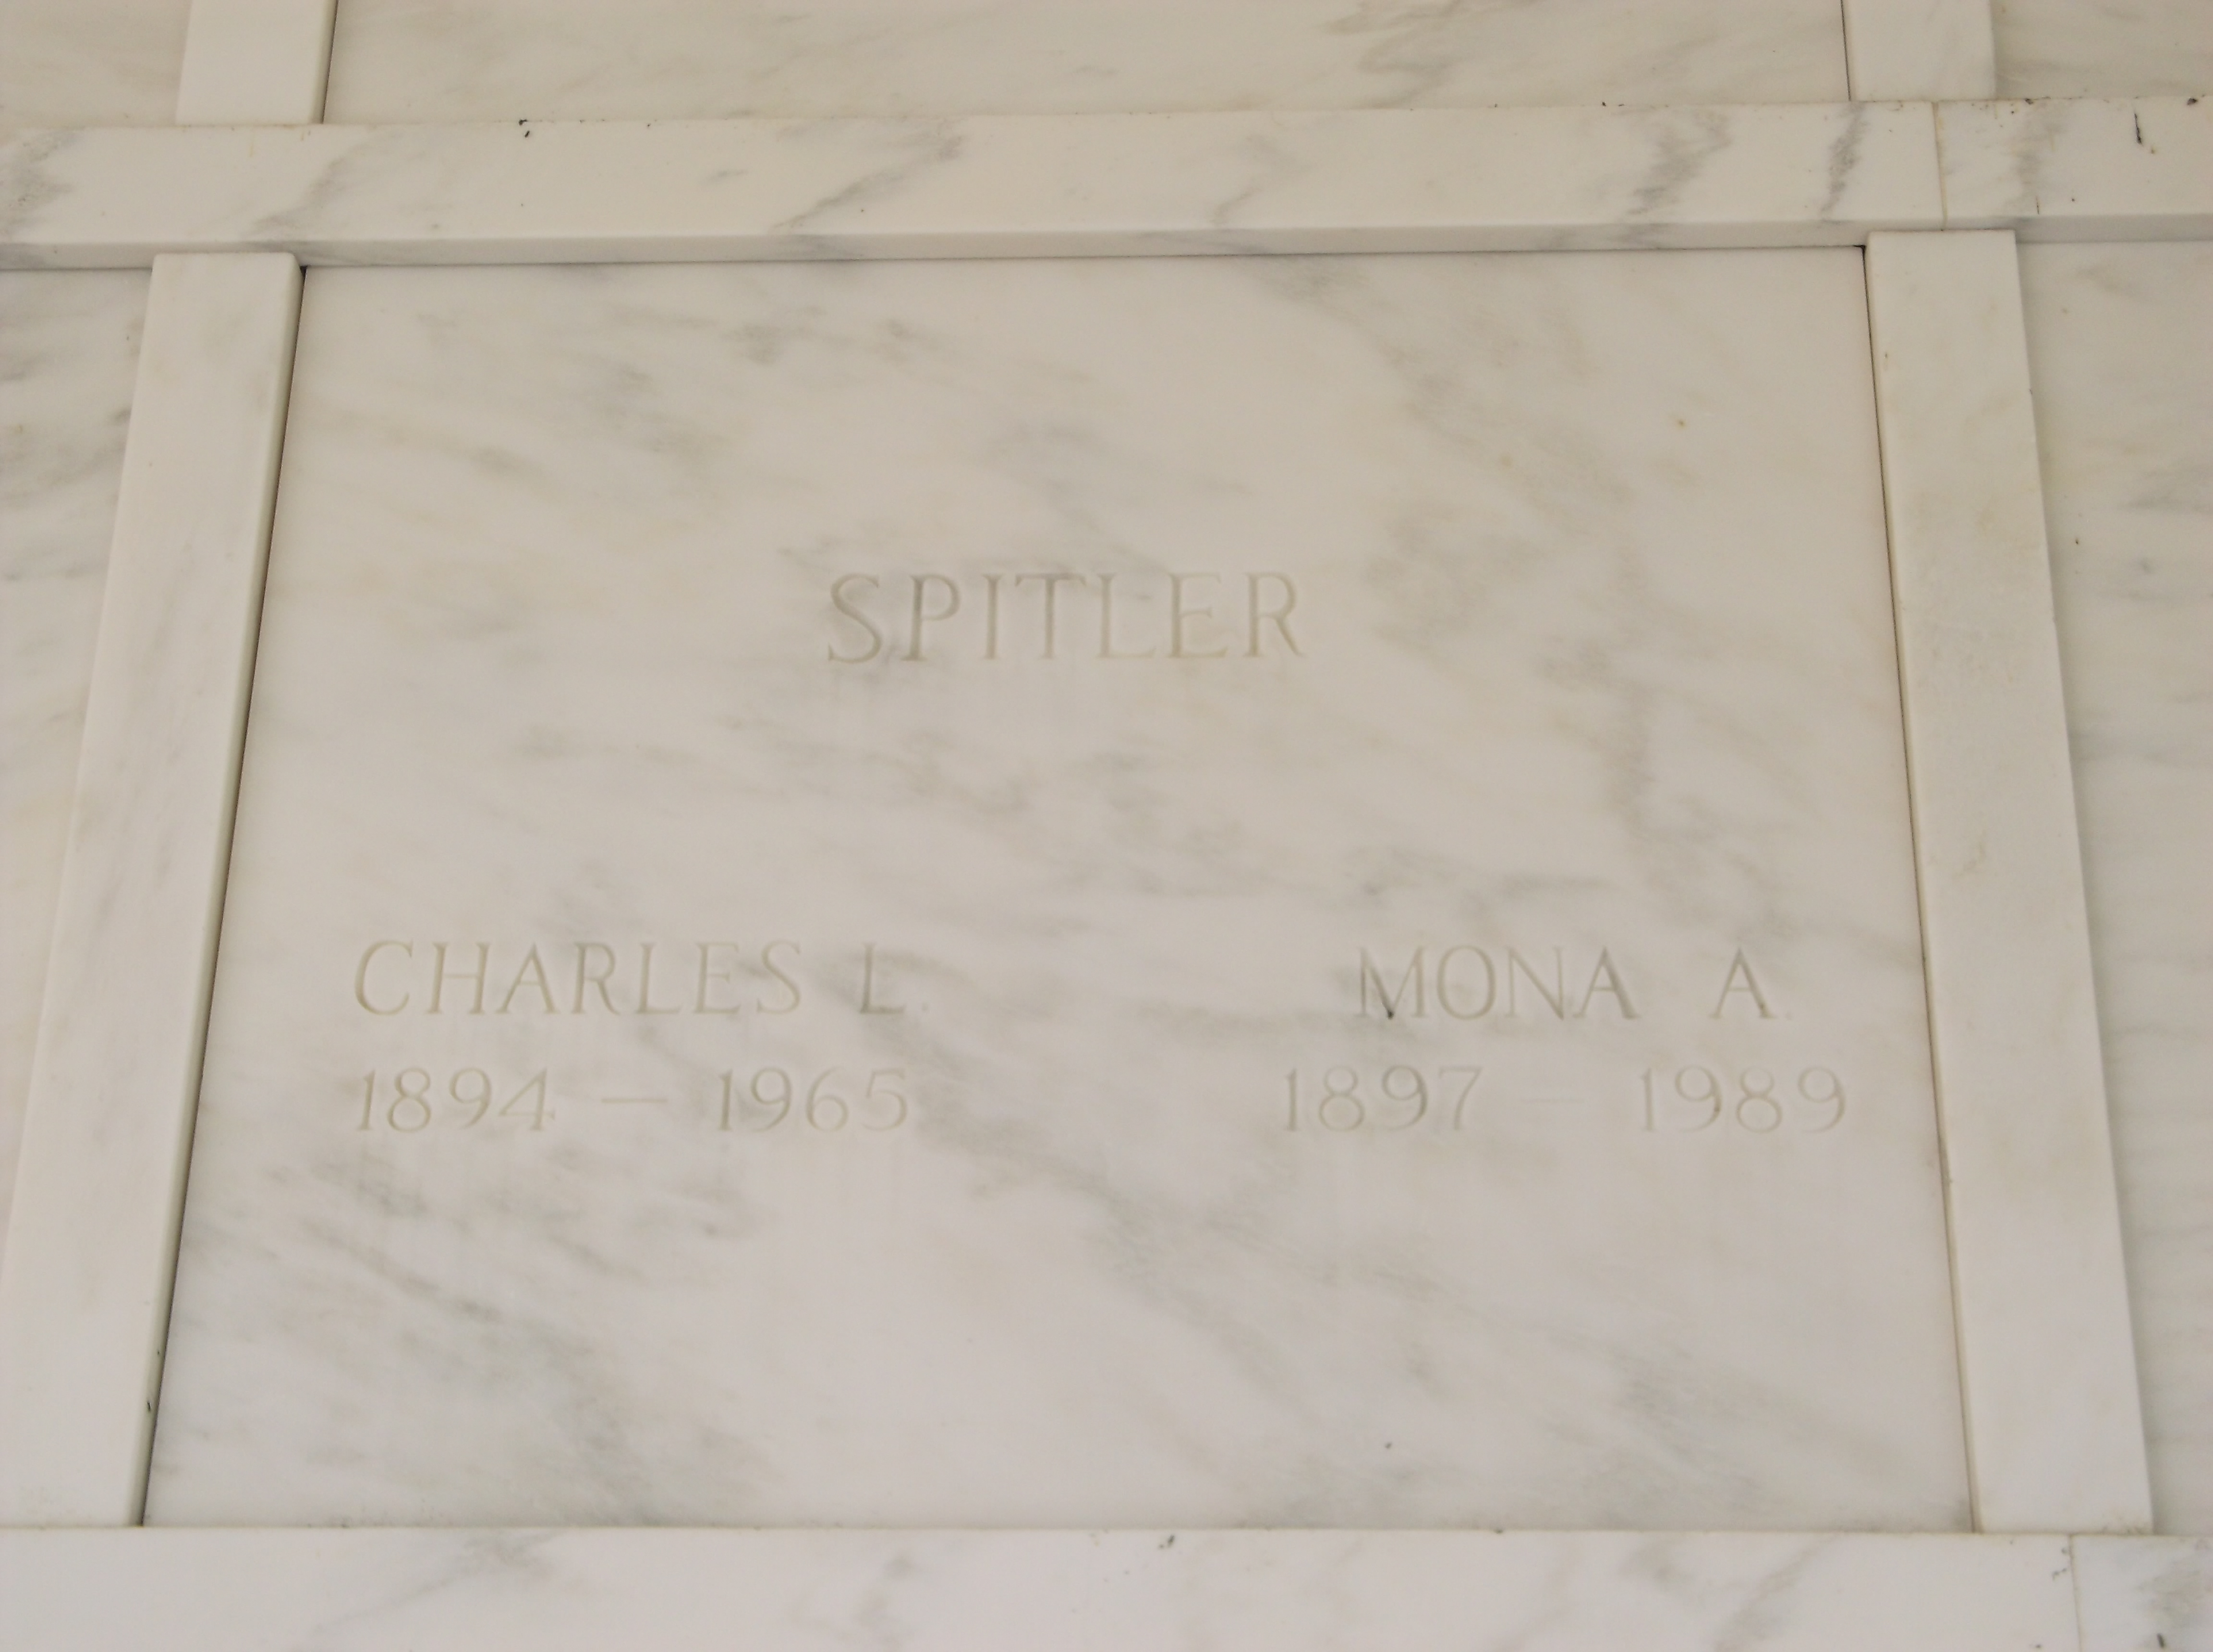 Charles L Spitler